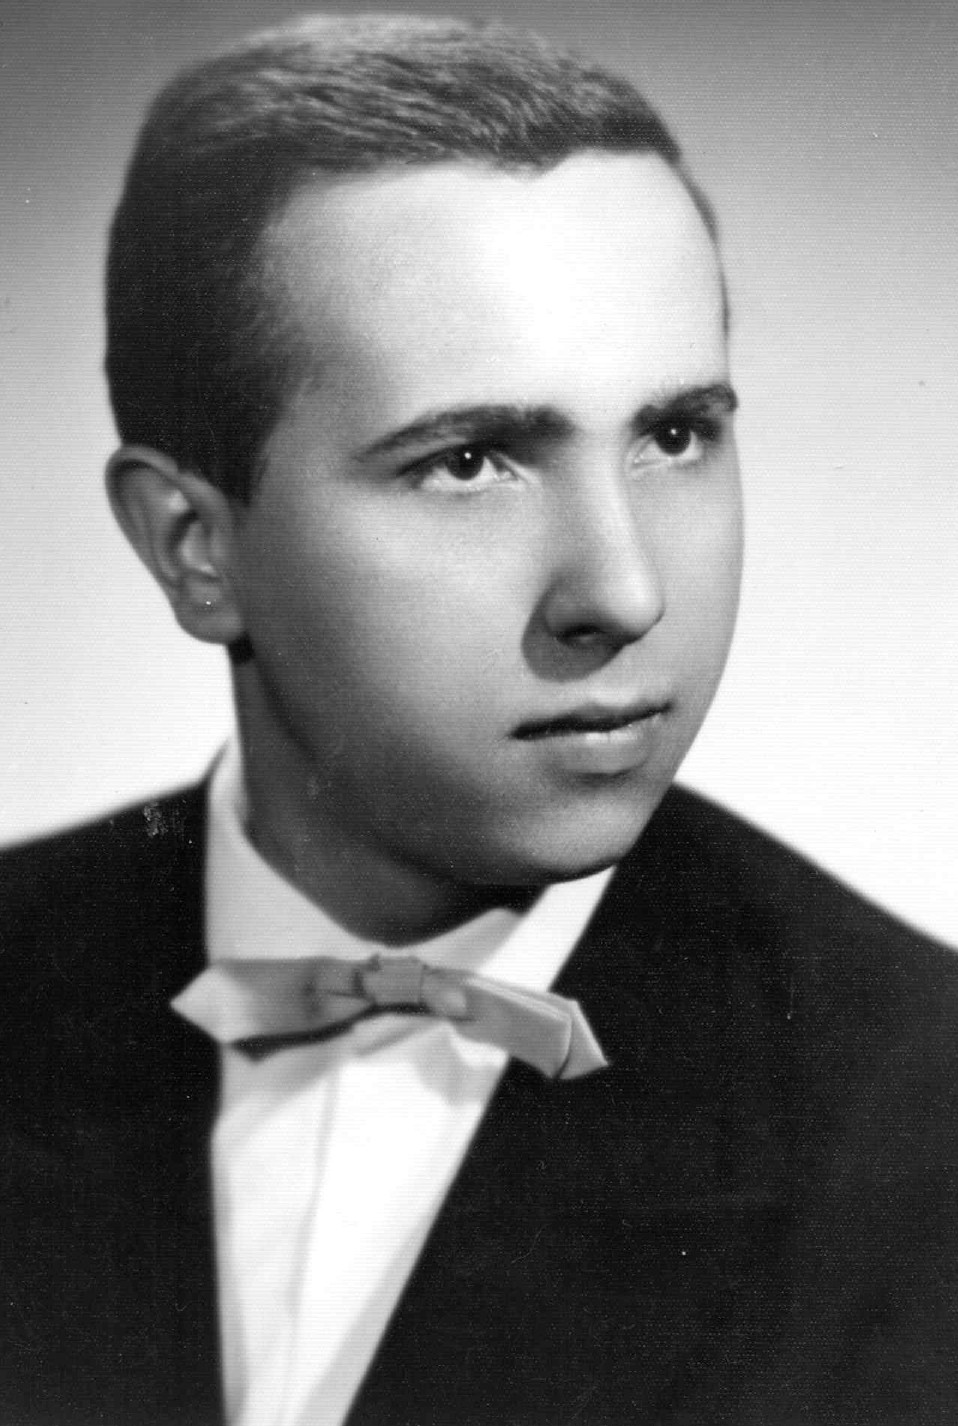 Arnošt Runčík in graduation photo in 1962
